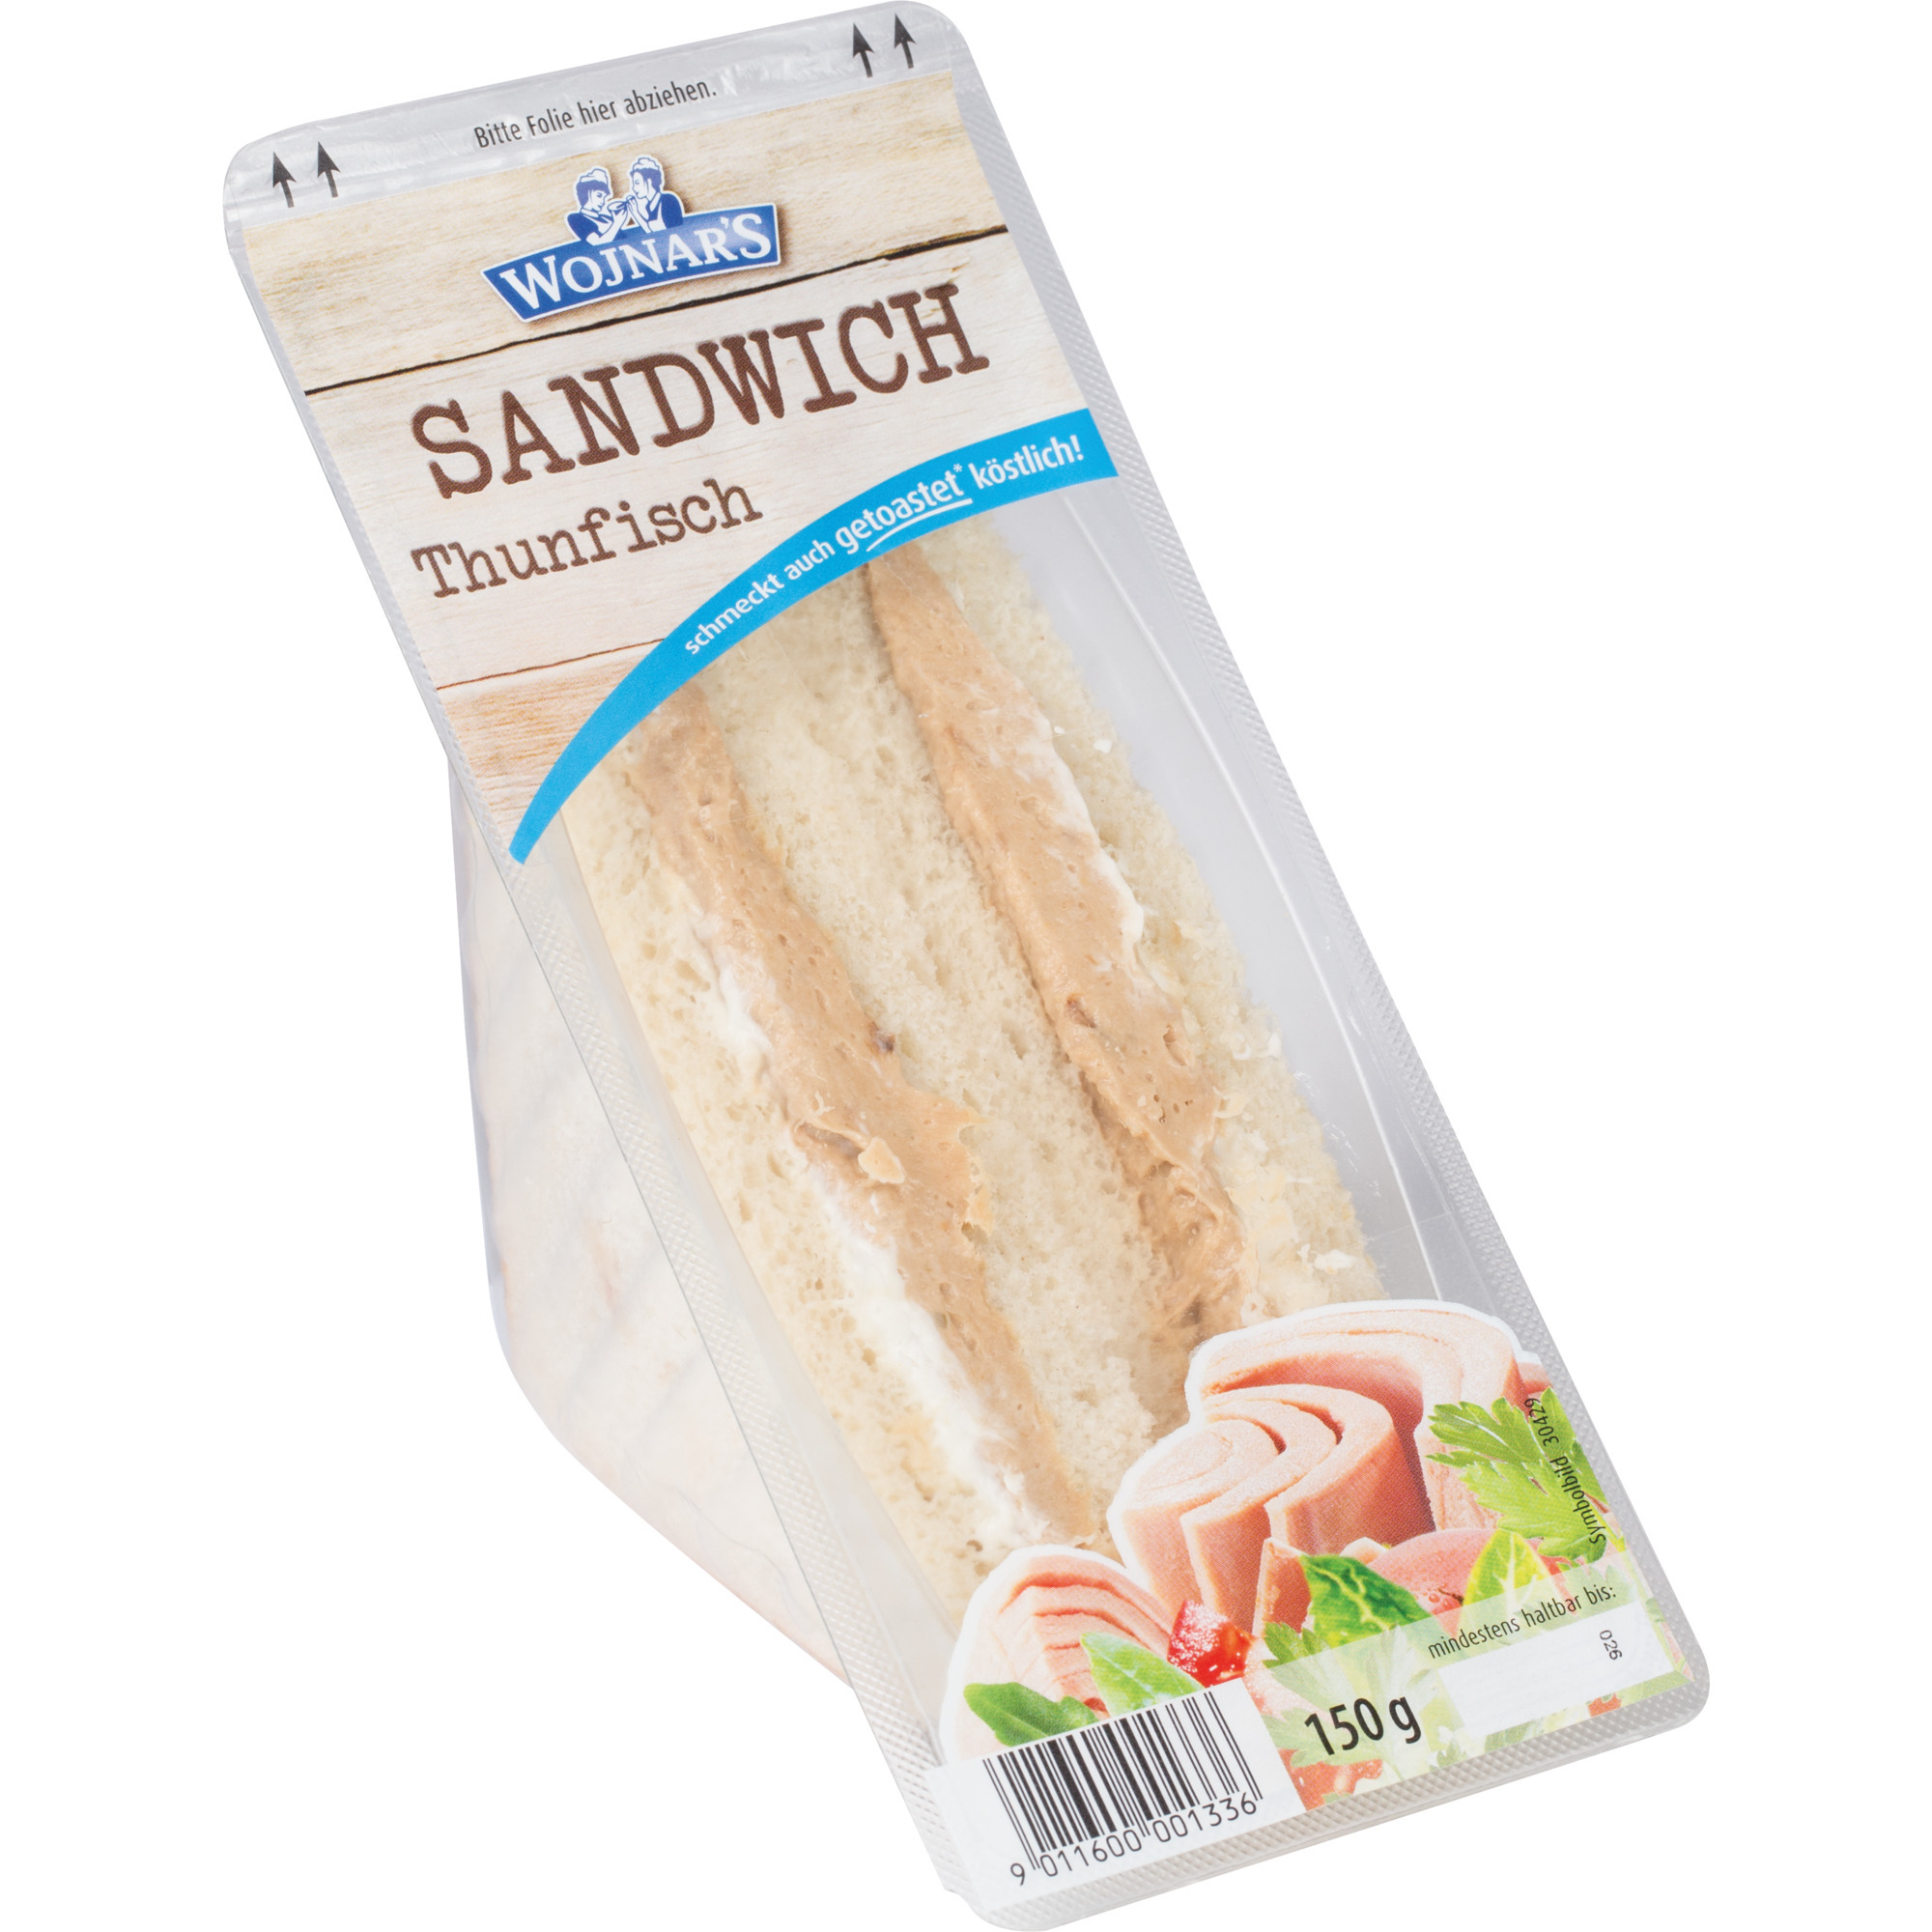 Wojnar's Sandwich 150g, Thunfisch